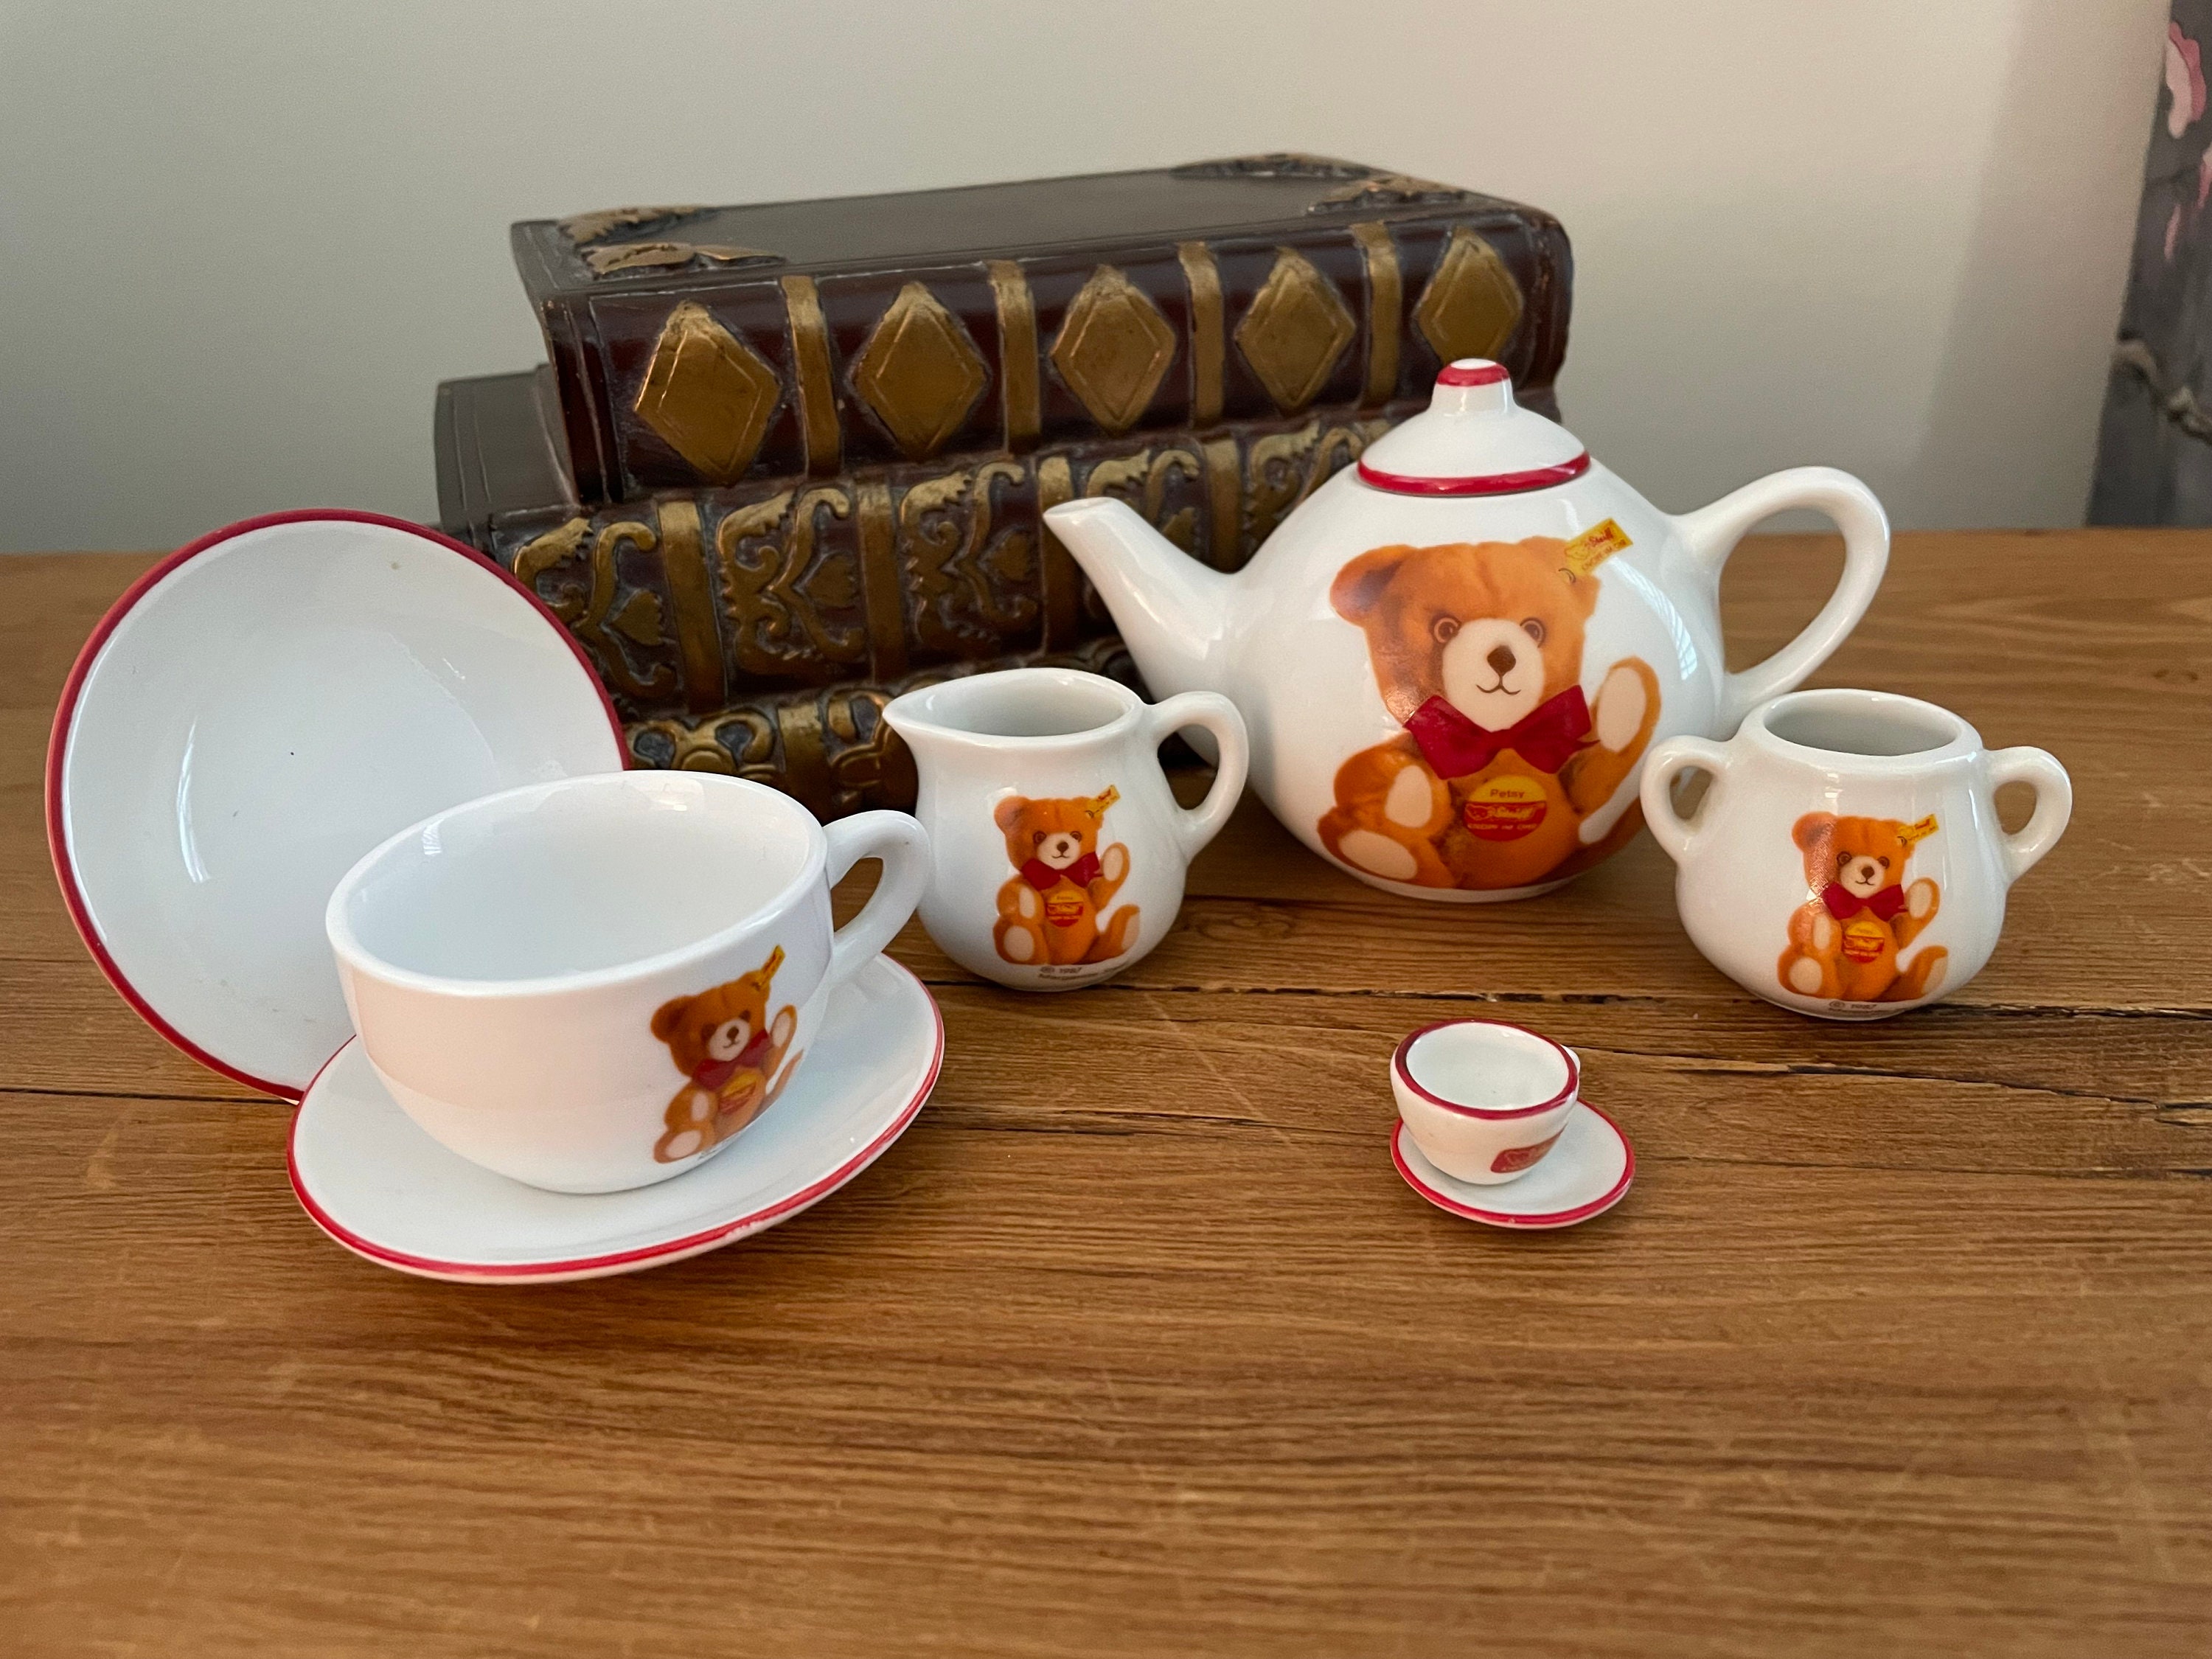 Fao Schwarz Hand-glazed Ceramic Tea Party Set - 9pc : Target